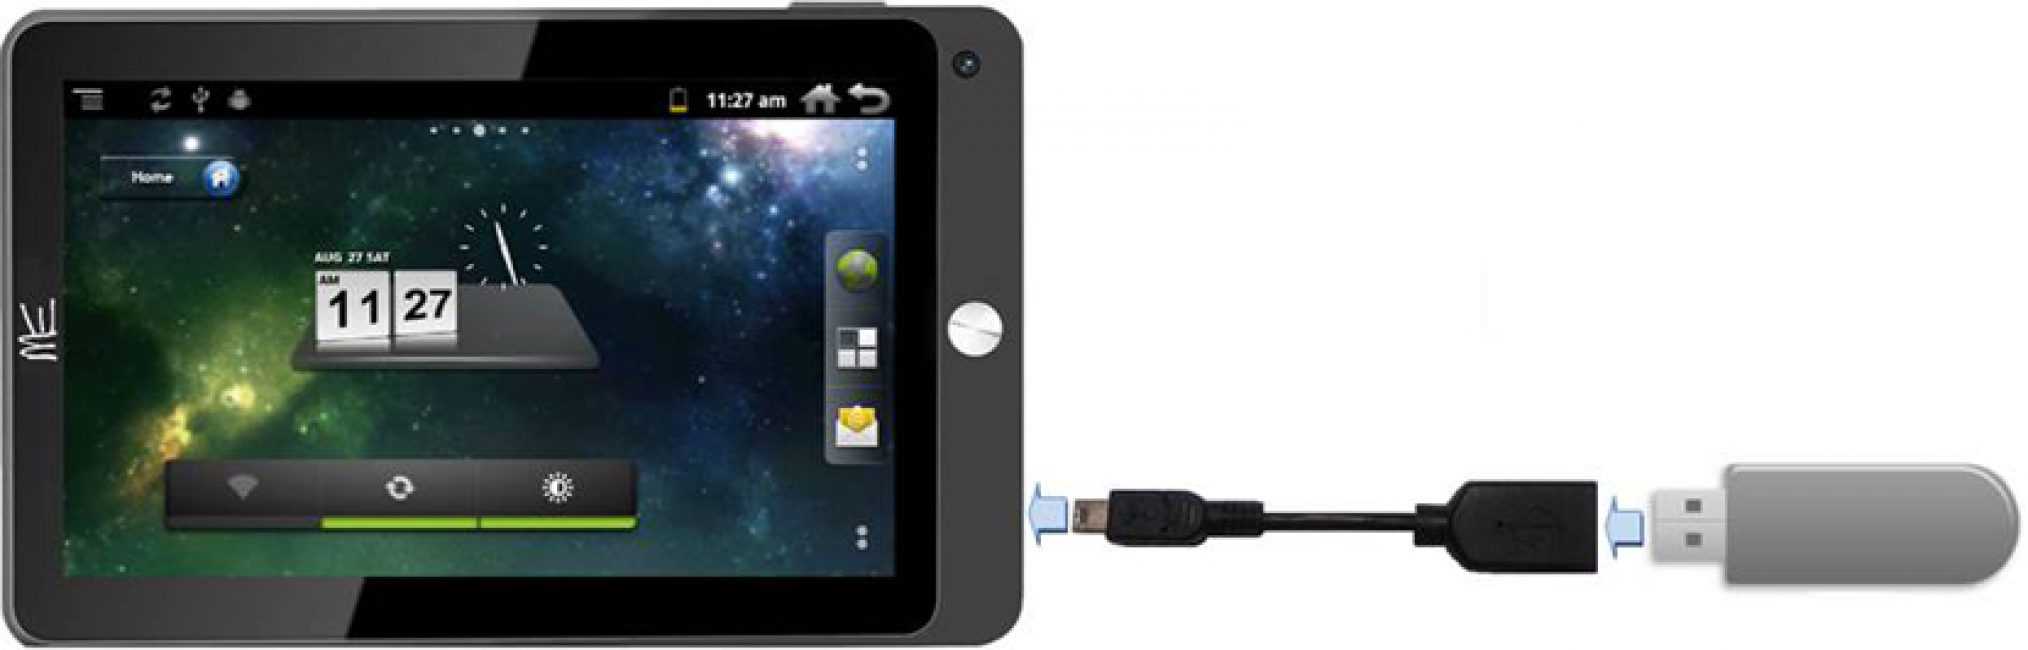 Wifi планшета андроид. USB модем 4g для планшета андроид. 4g модем для планшета. Внешний 4,g модем для планшета с андроидом. Внешний модем для планшета IPAD.